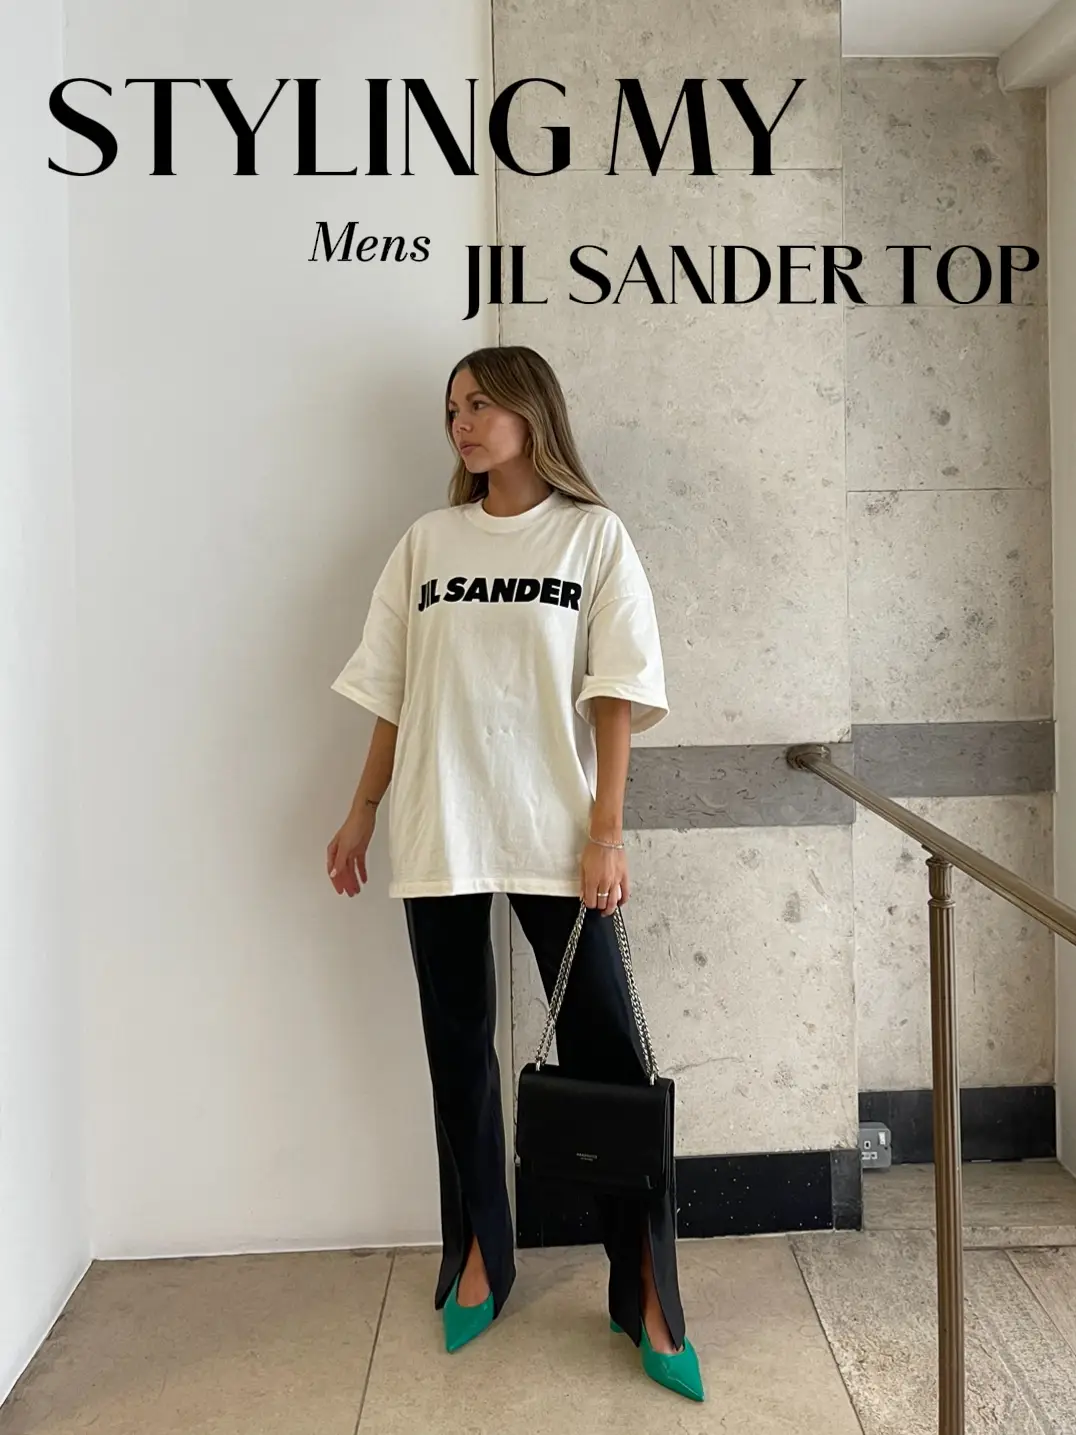 Jil Sander: 'If I had the power I would ban leggings', Jil Sander